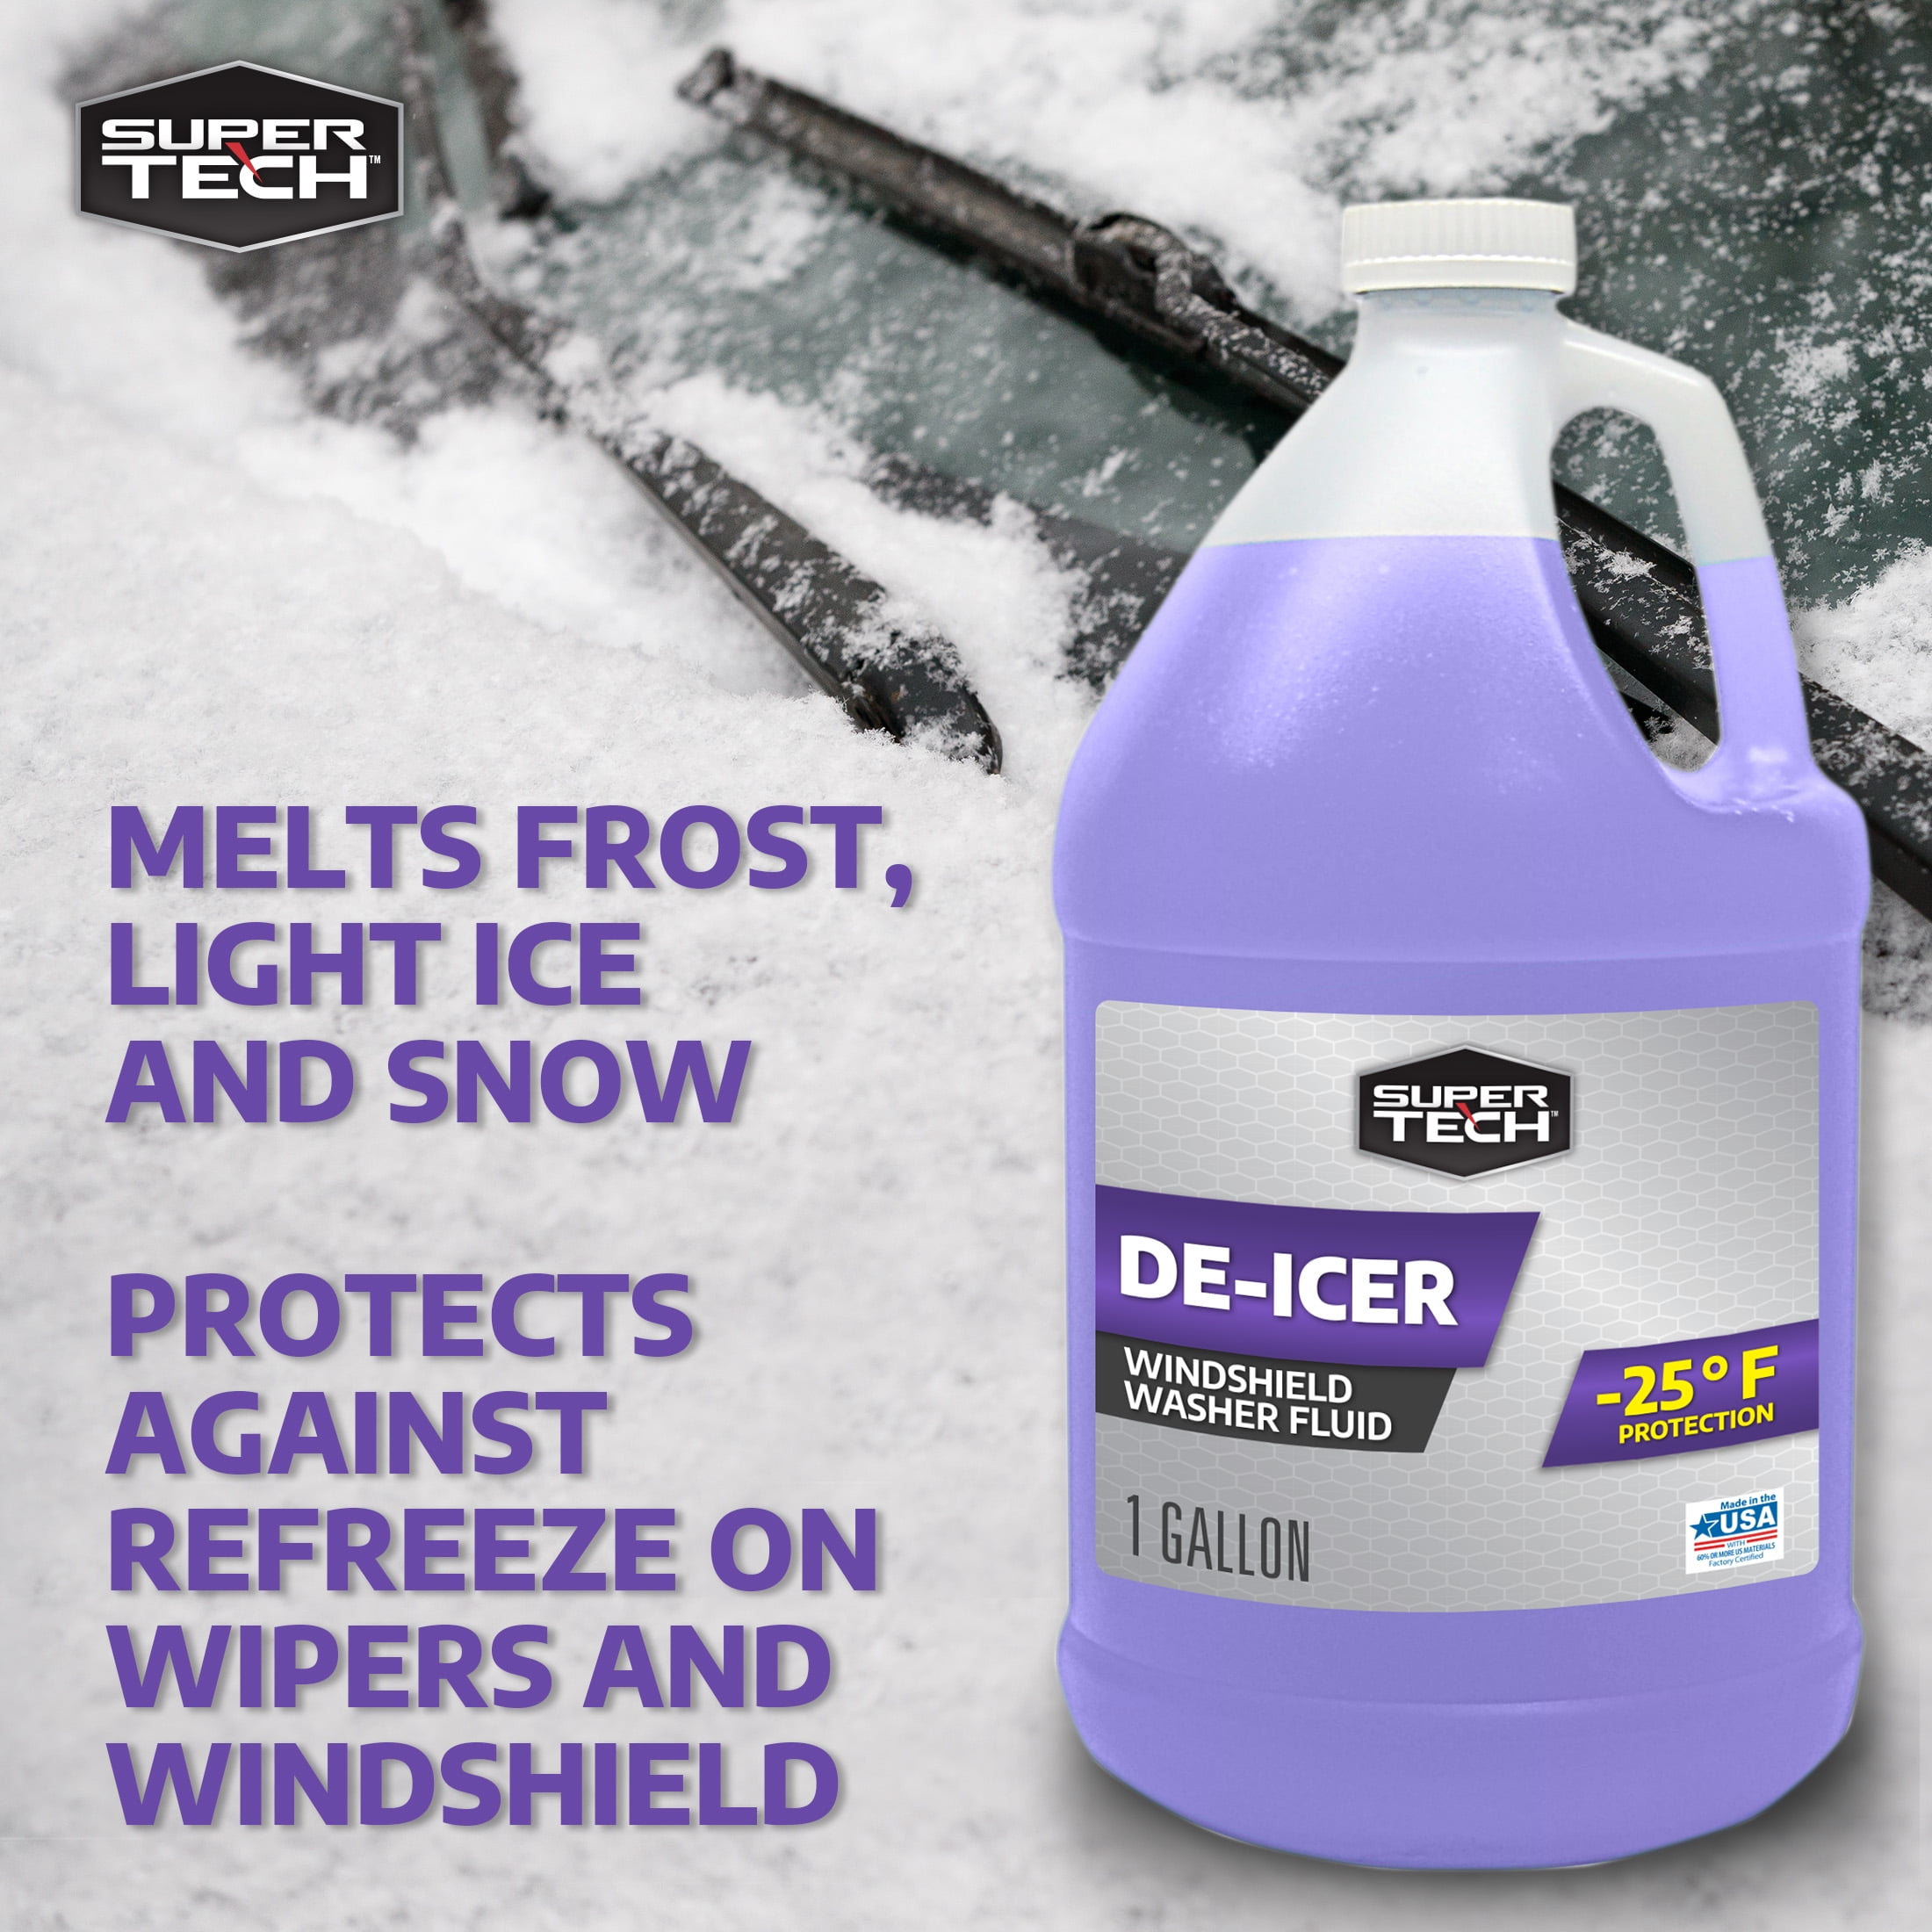 Refill the un-refillable windshield de-icer! 